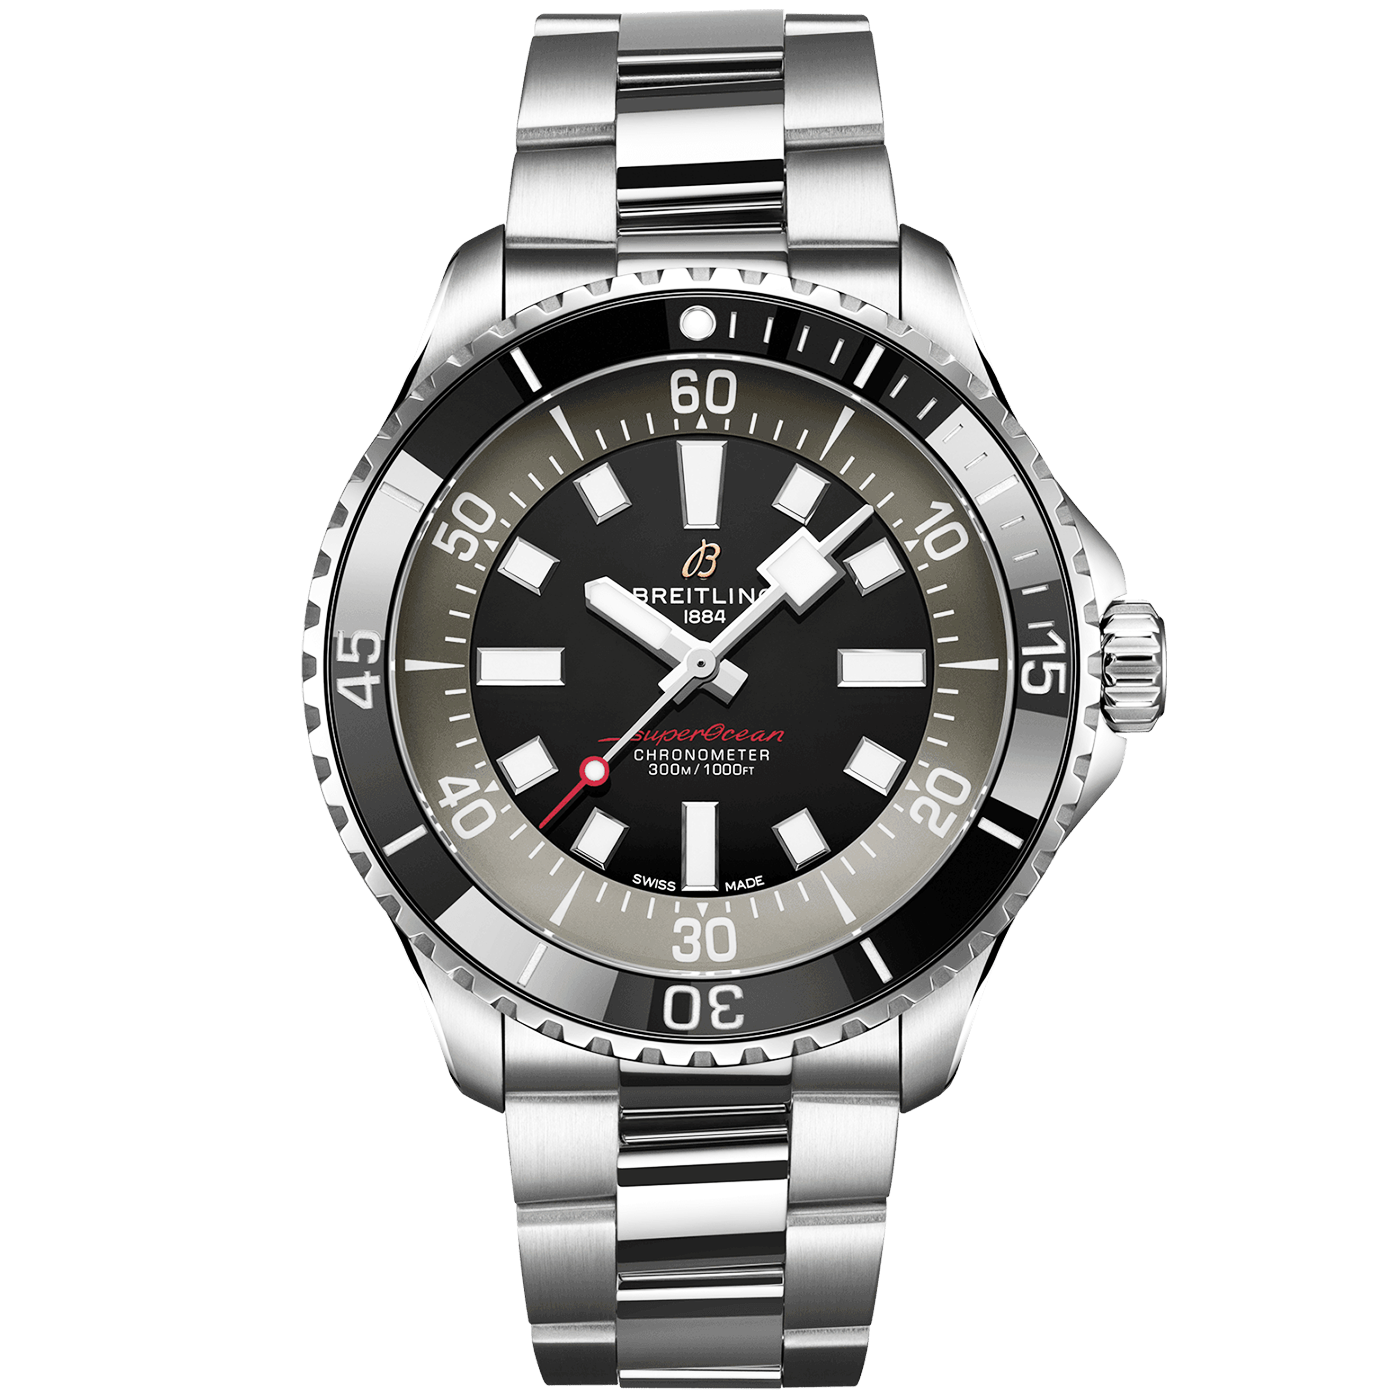 Superocean 44mm UK Limited Edition Bracelet Watch